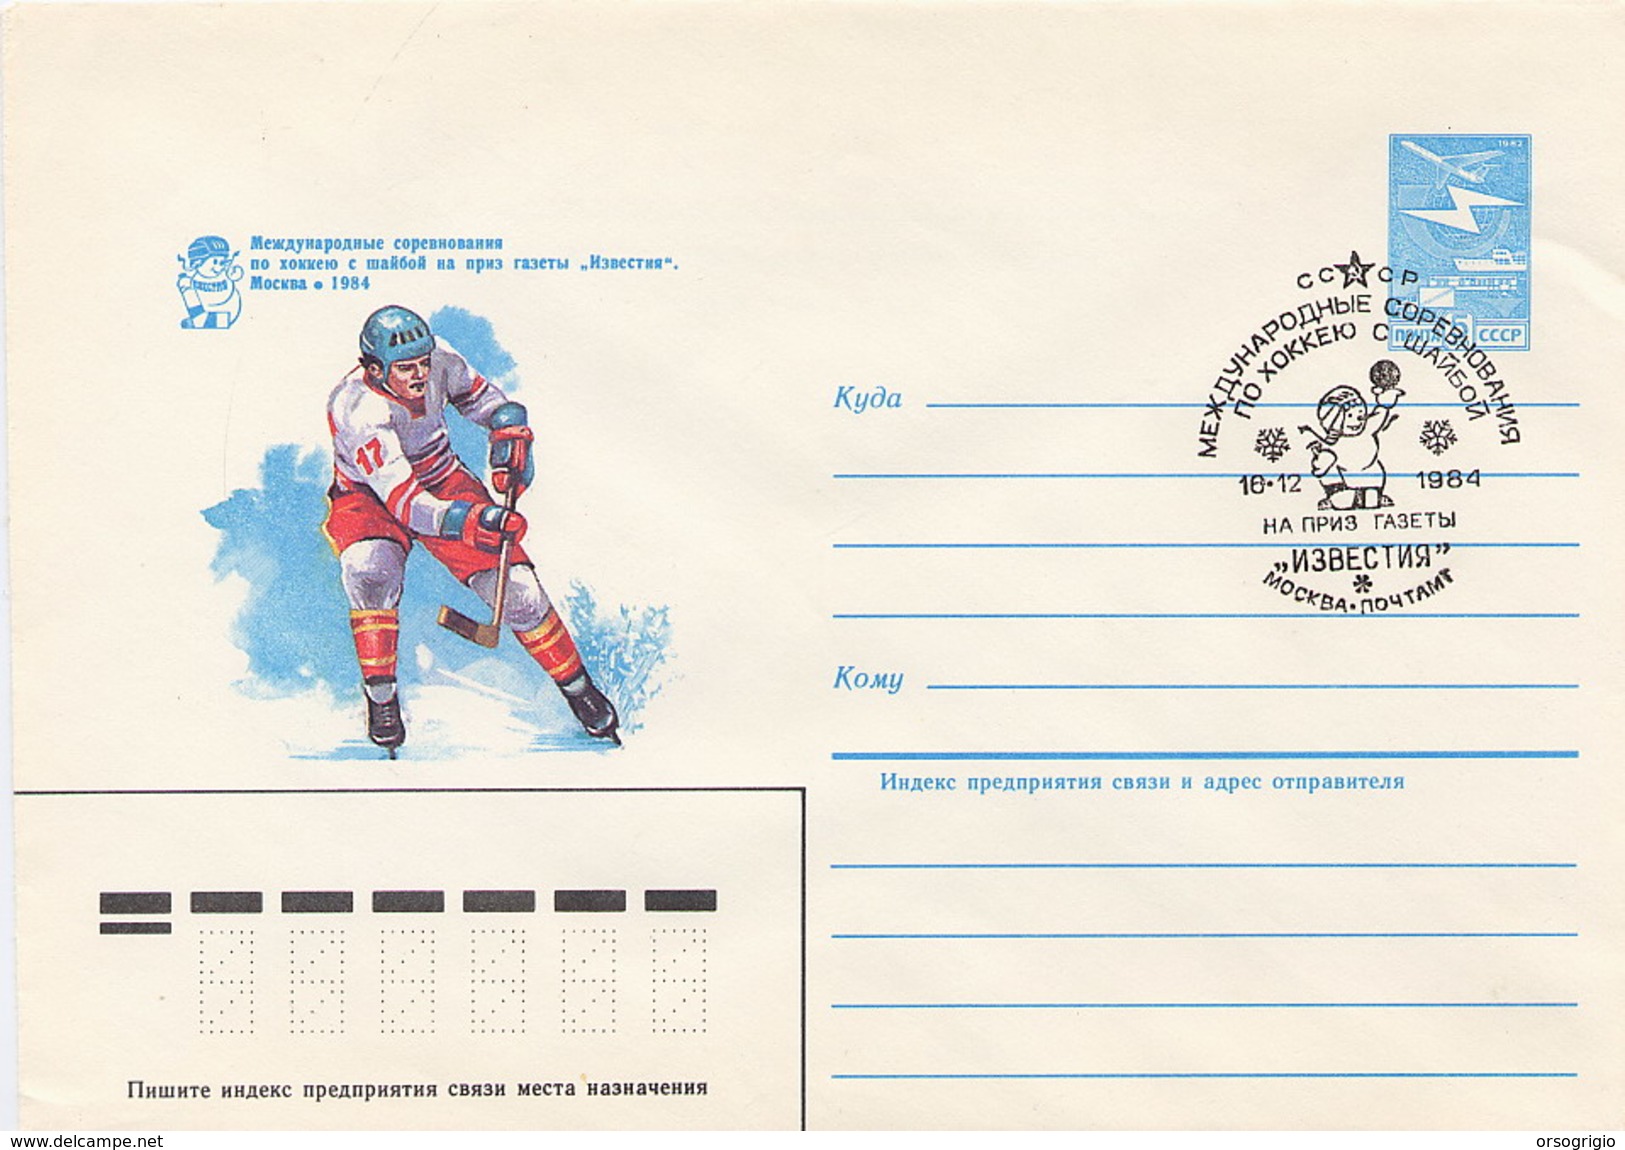 RUSSIA - HOCKEY ON ICE - Intero Postale - Hockey (su Ghiaccio)